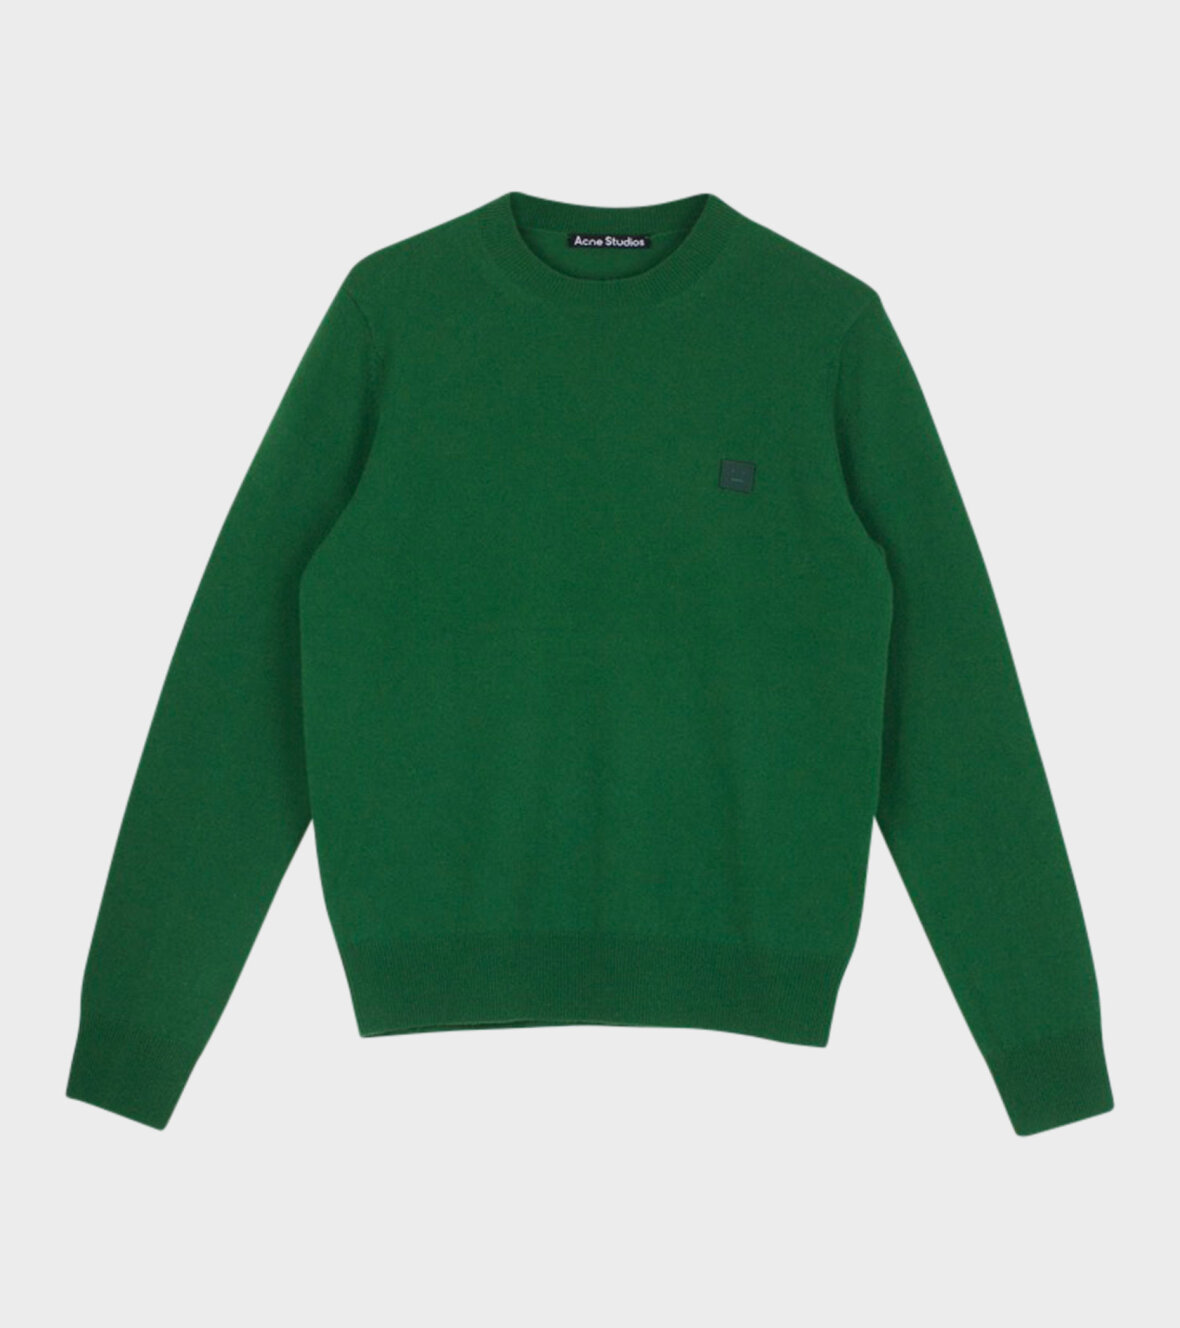 Acne Studios Kalon Face Sweater Green - Adams